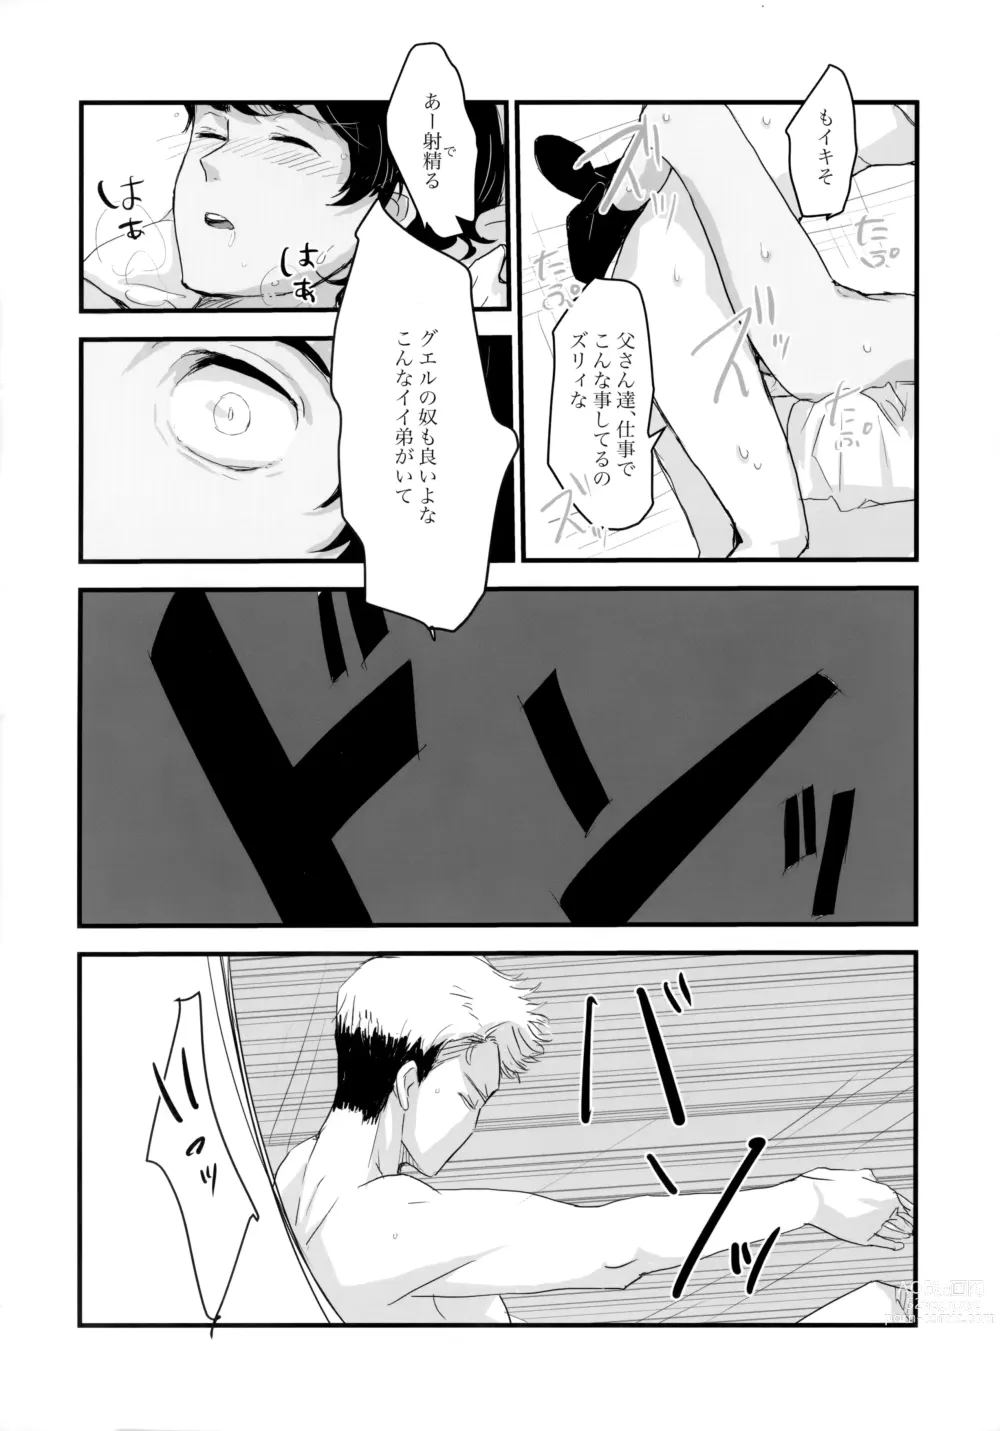 Page 41 of doujinshi Torikago